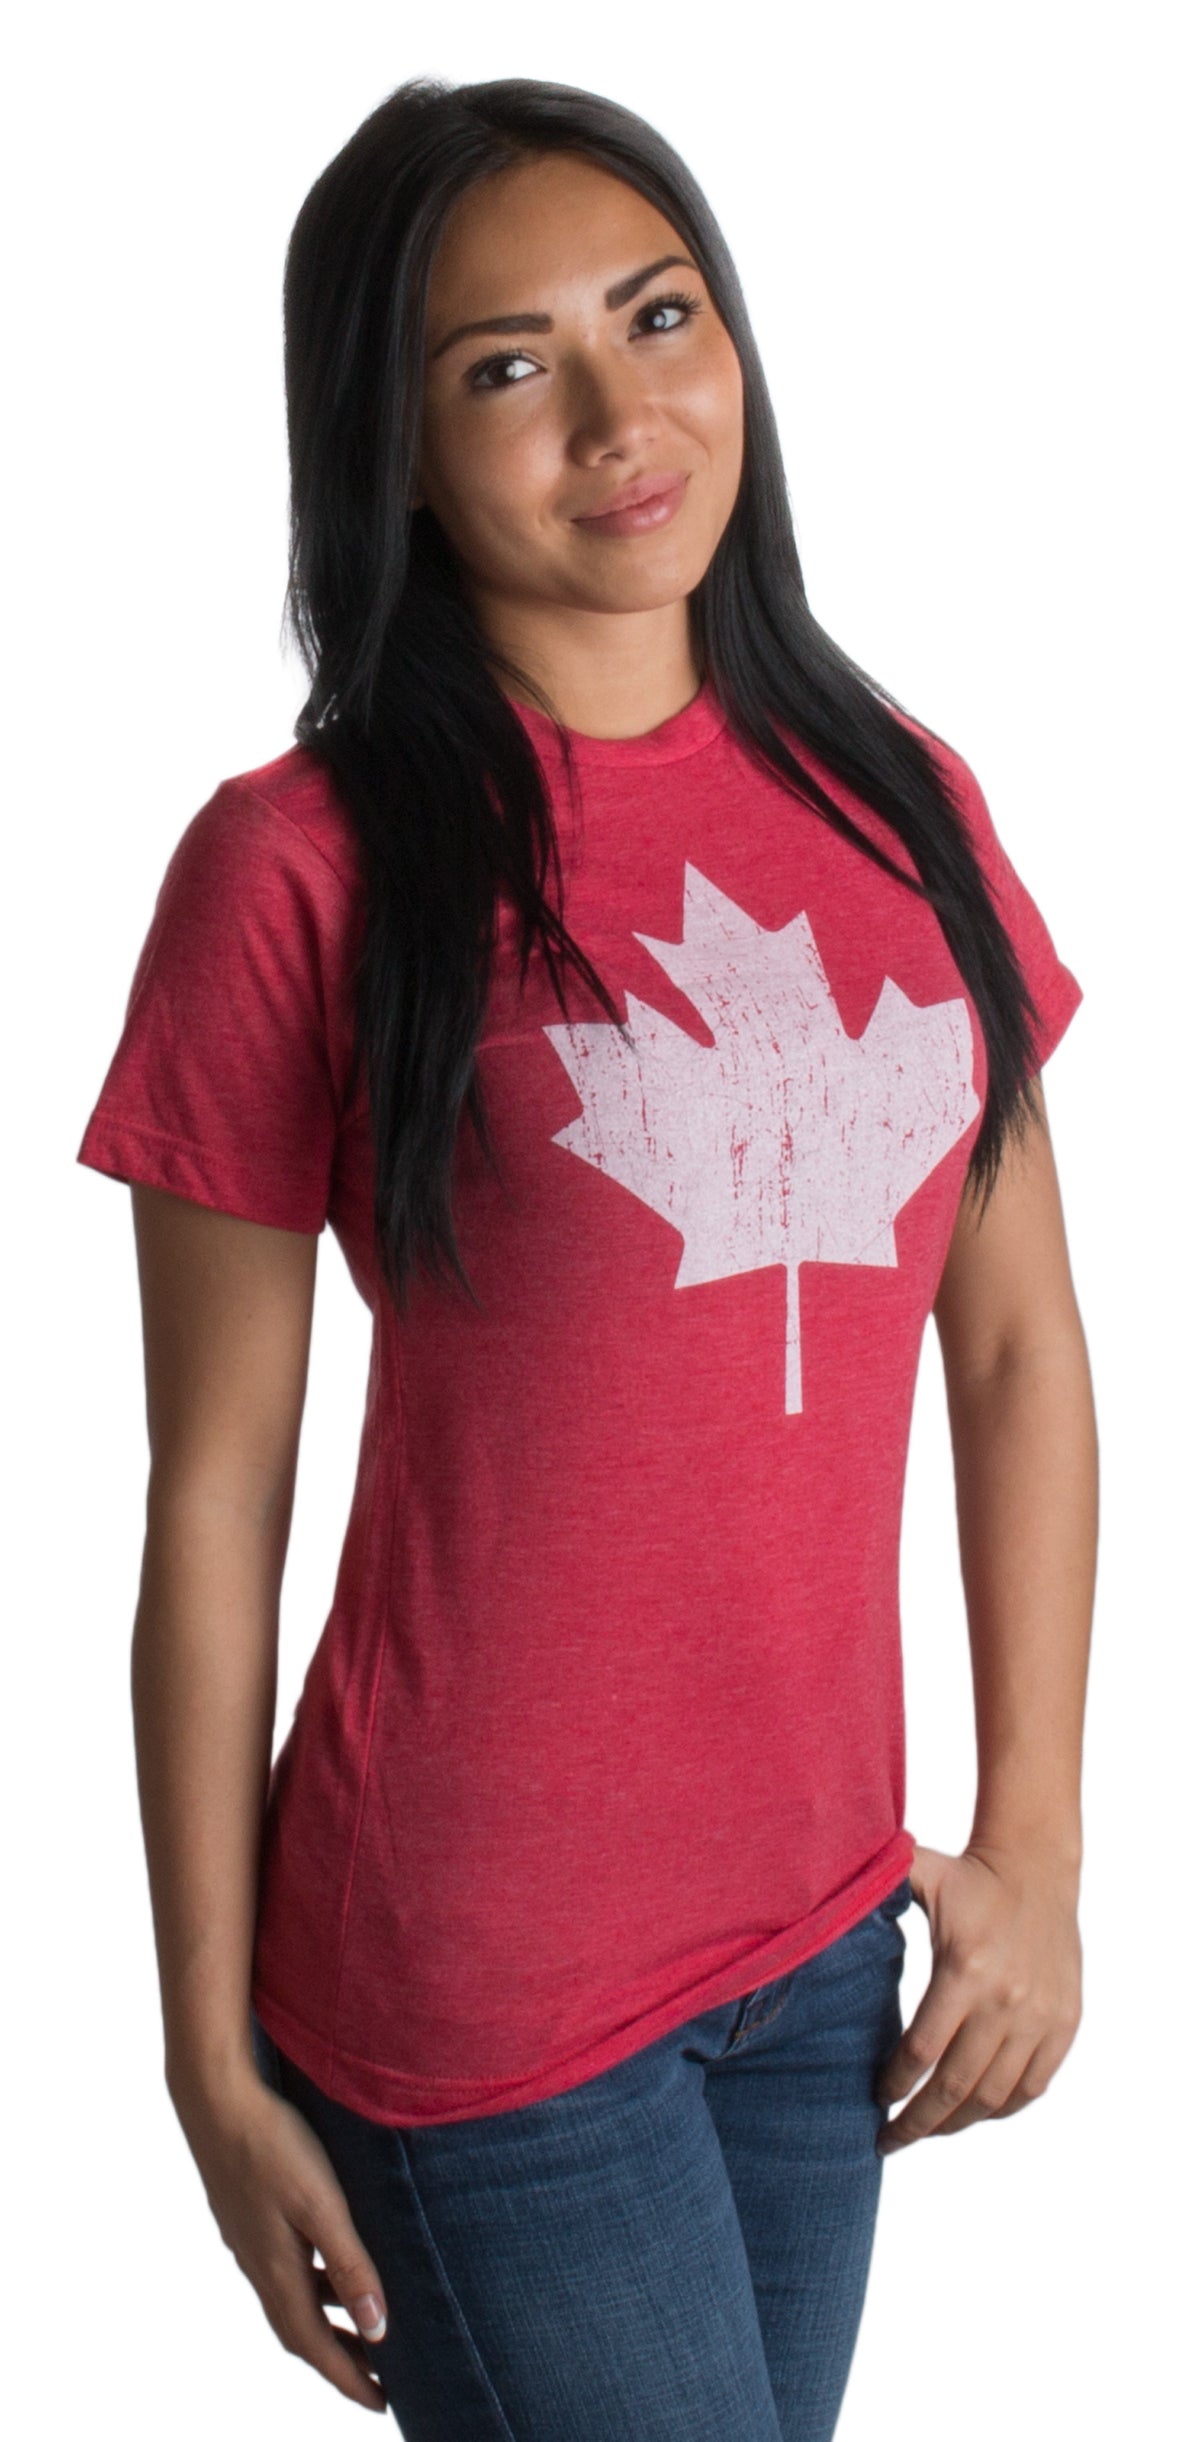 Canada Pride | Vintage Style, Retro-Feel Canadian Maple Leaf Unisex T-shirt